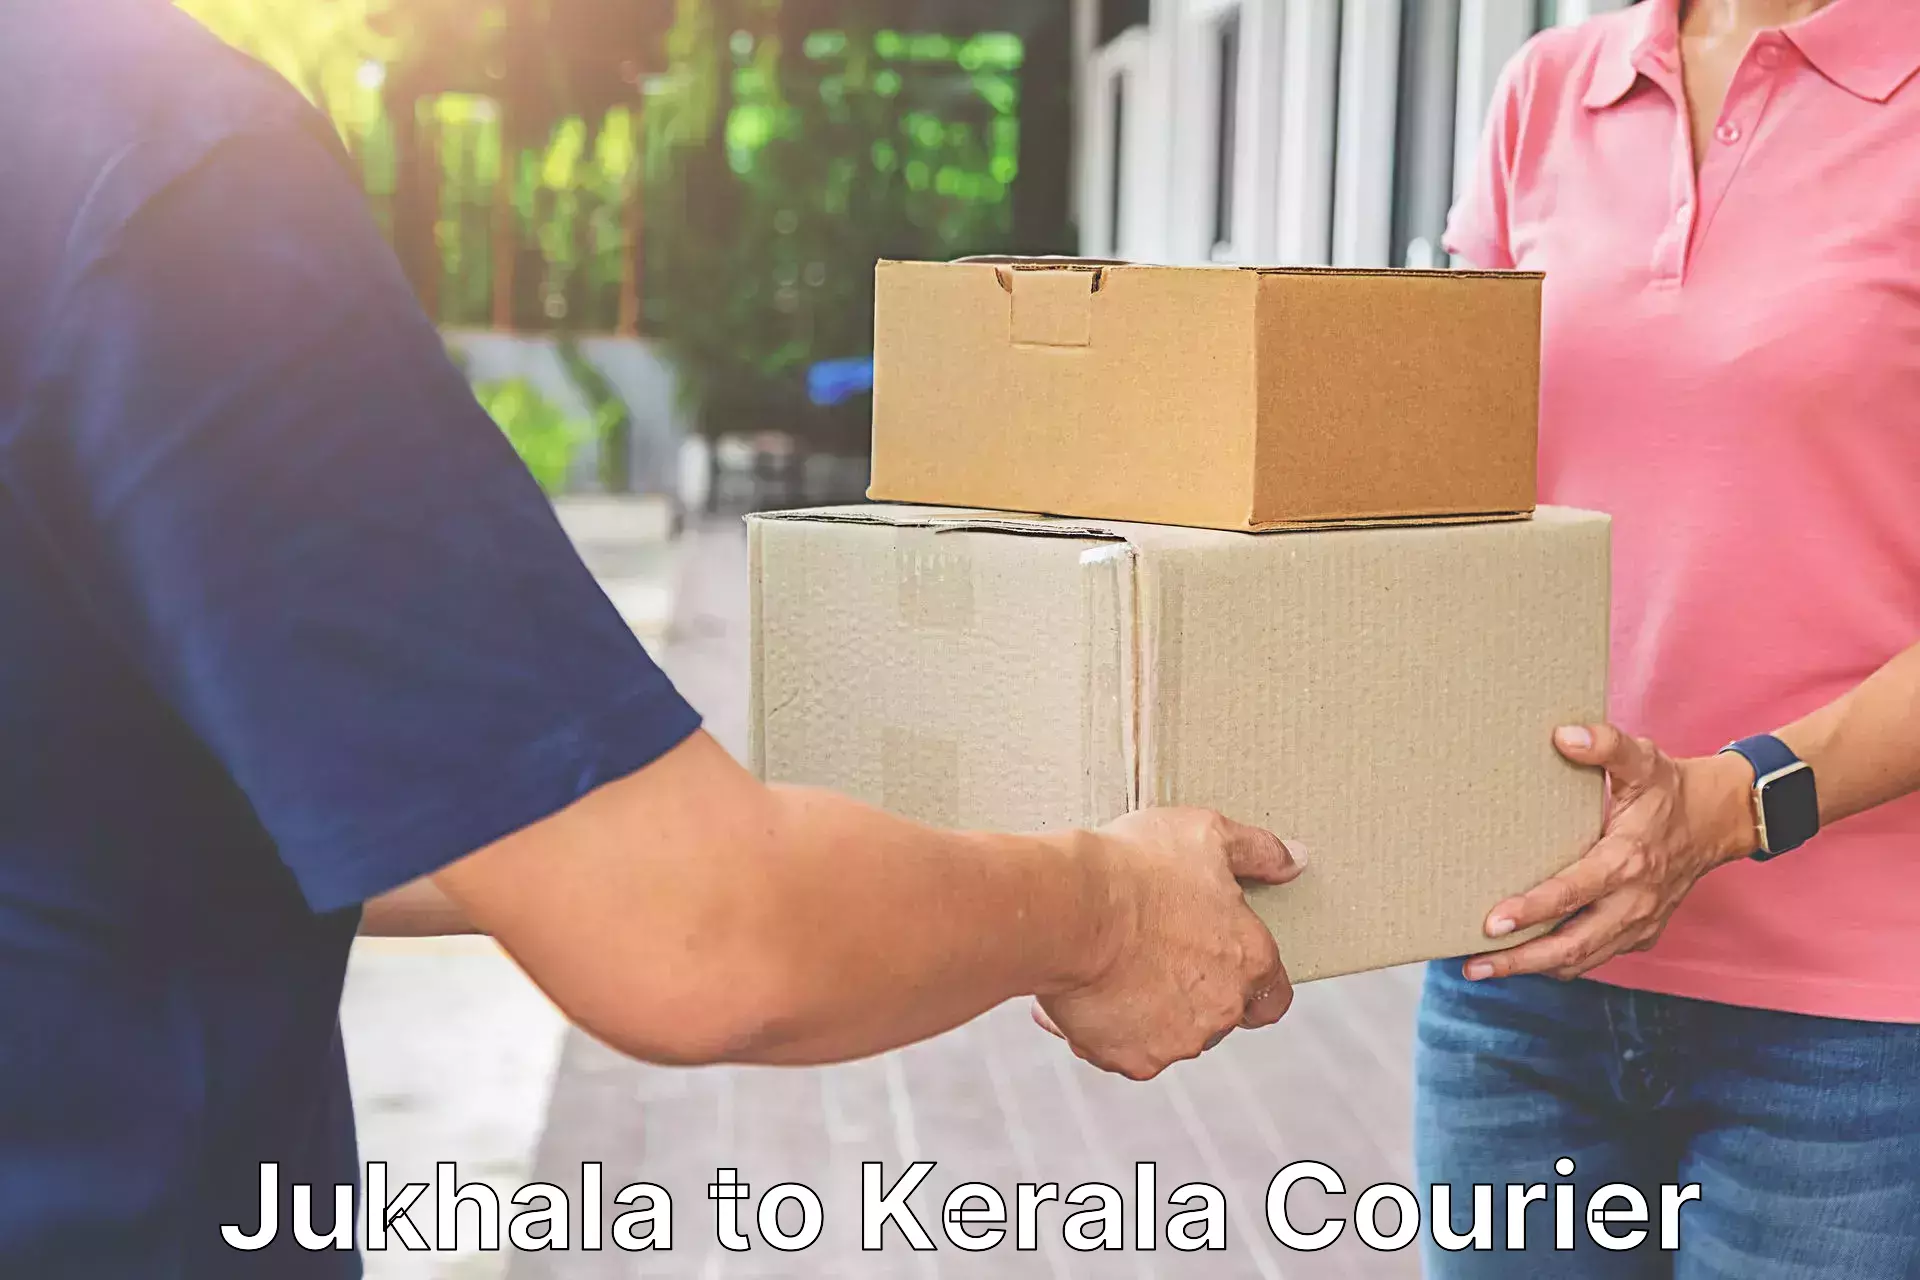 Courier service efficiency Jukhala to Kerala